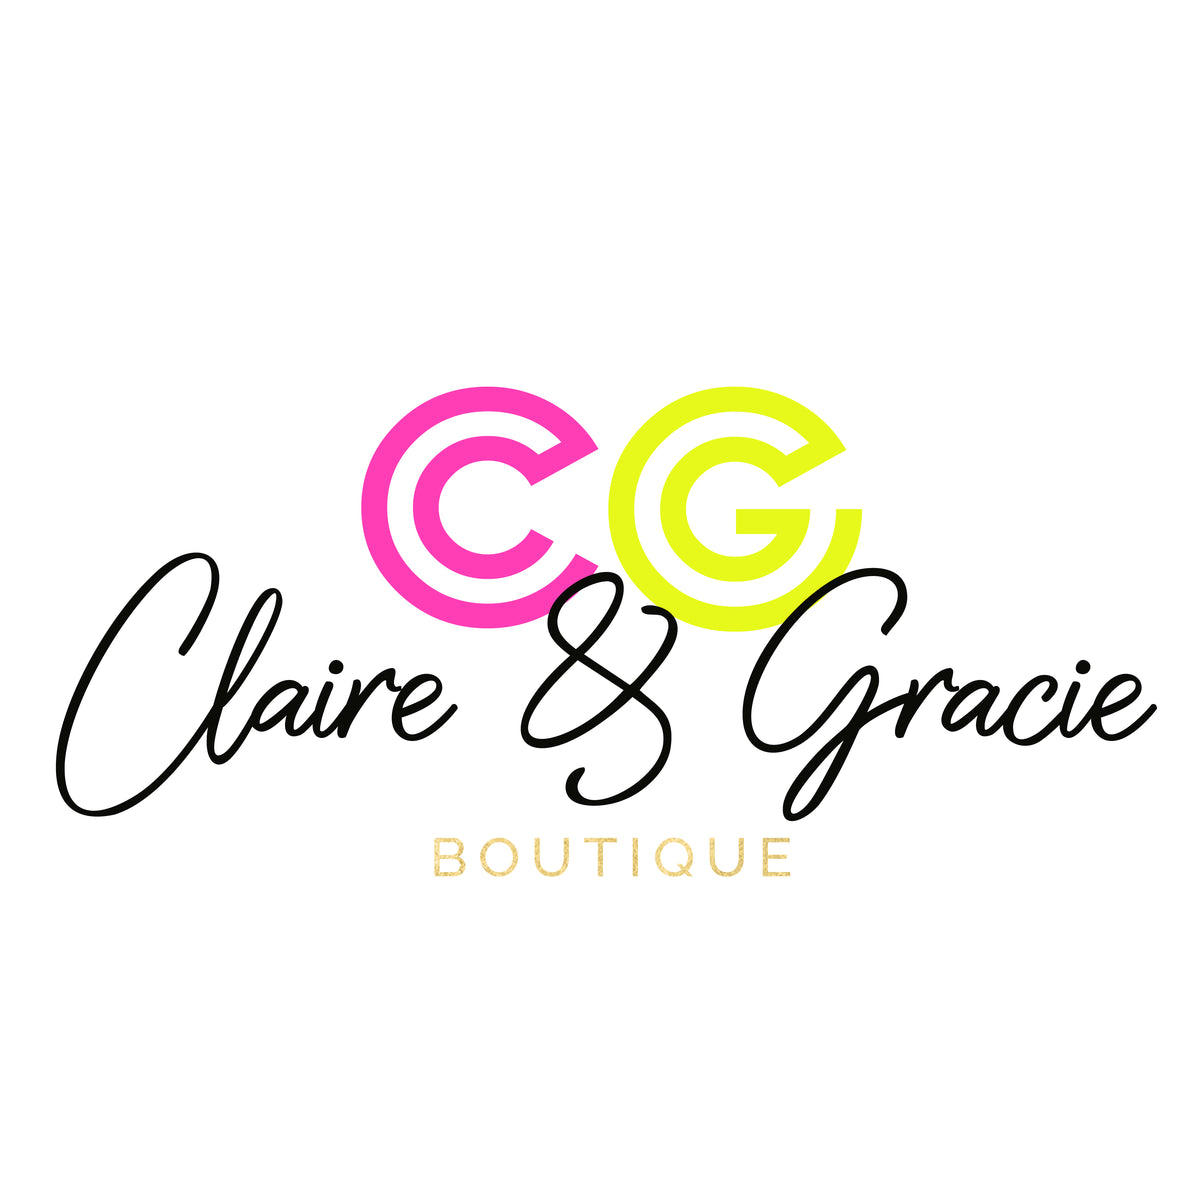 Claire and Gracie Boutique